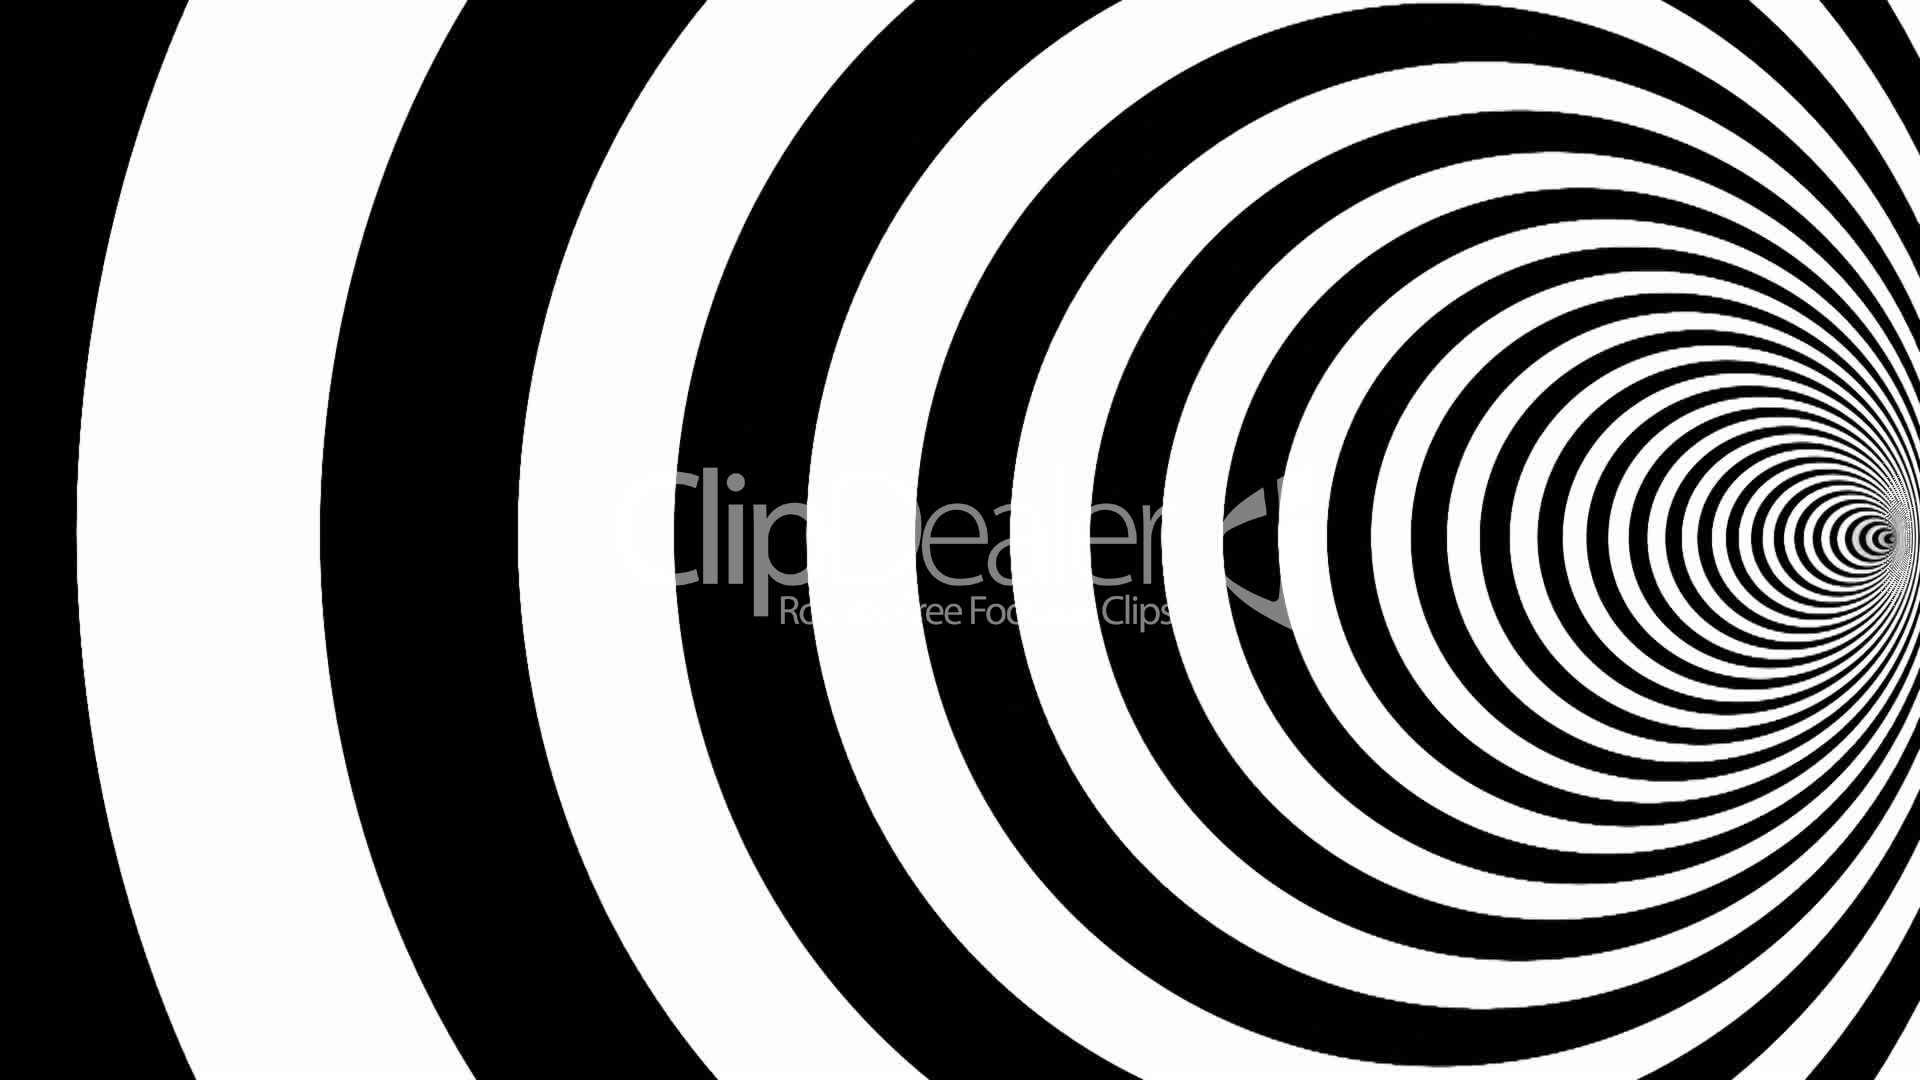 1920x1080 Optical illusion target tunnel retro spiral hypnosis .